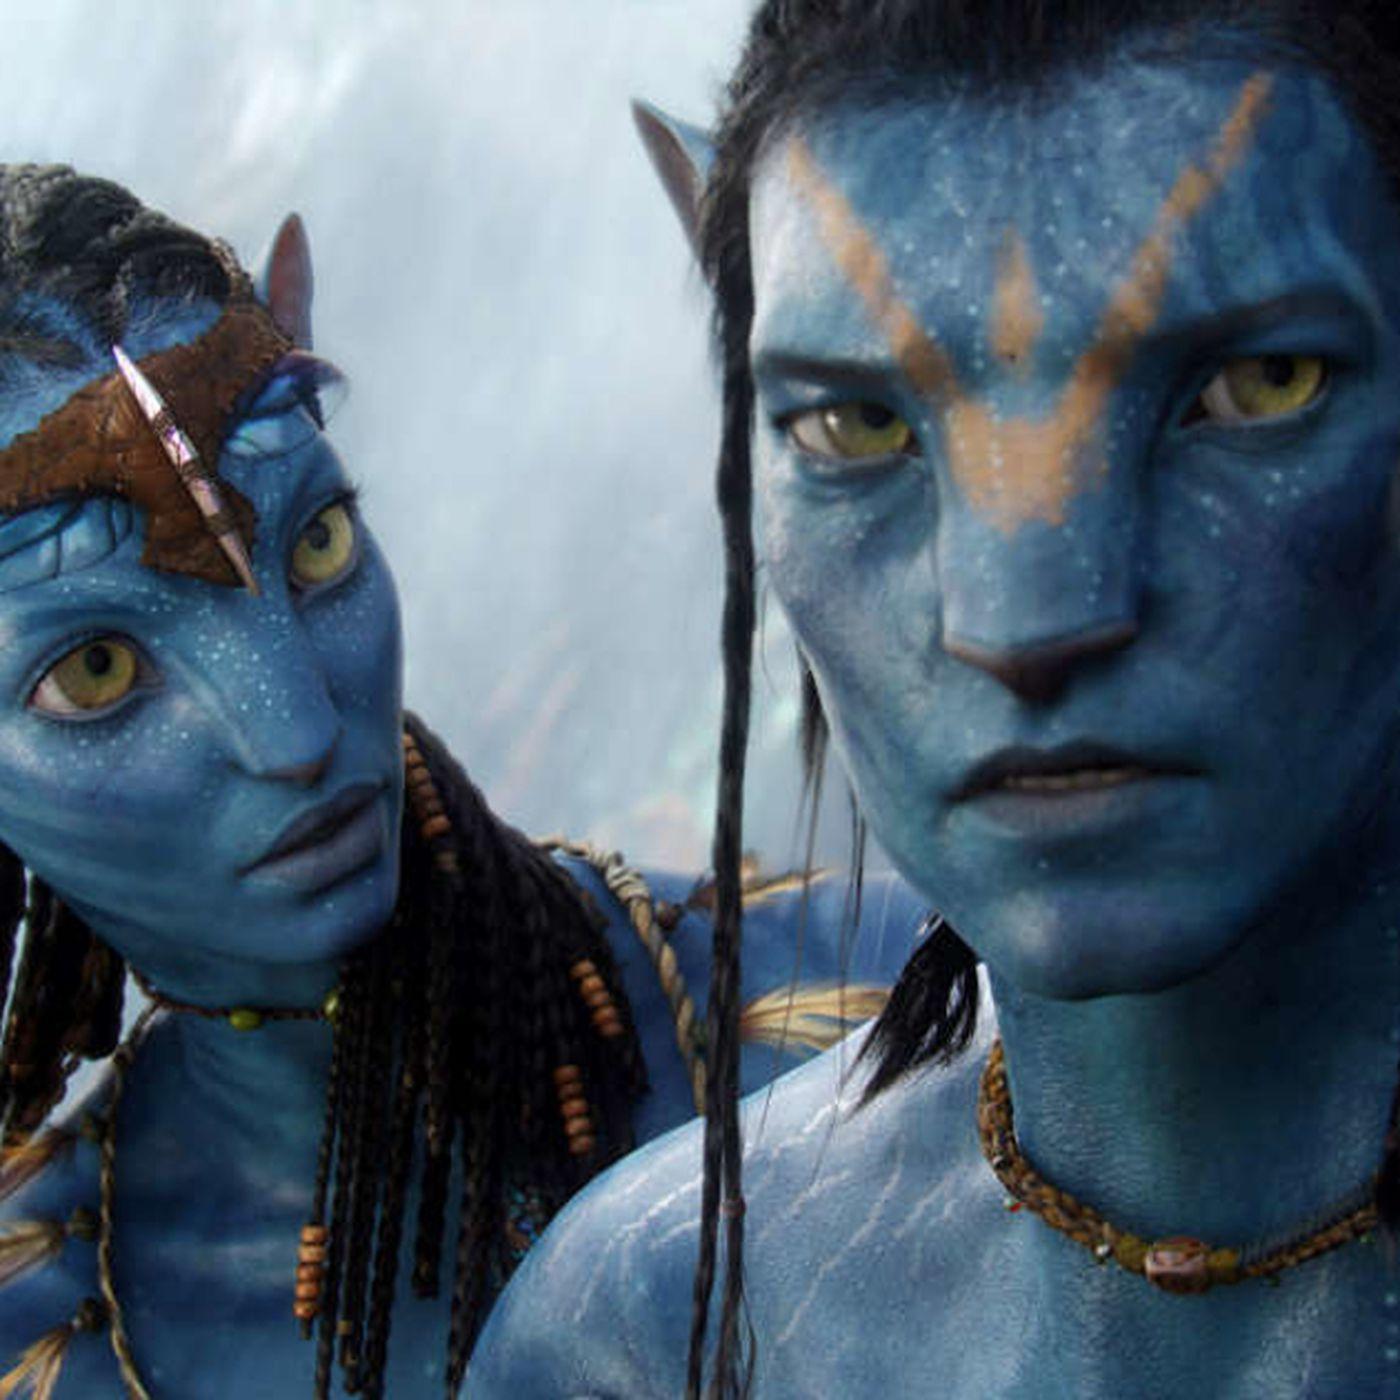 Avatar 2' sequel titles leaked months ago